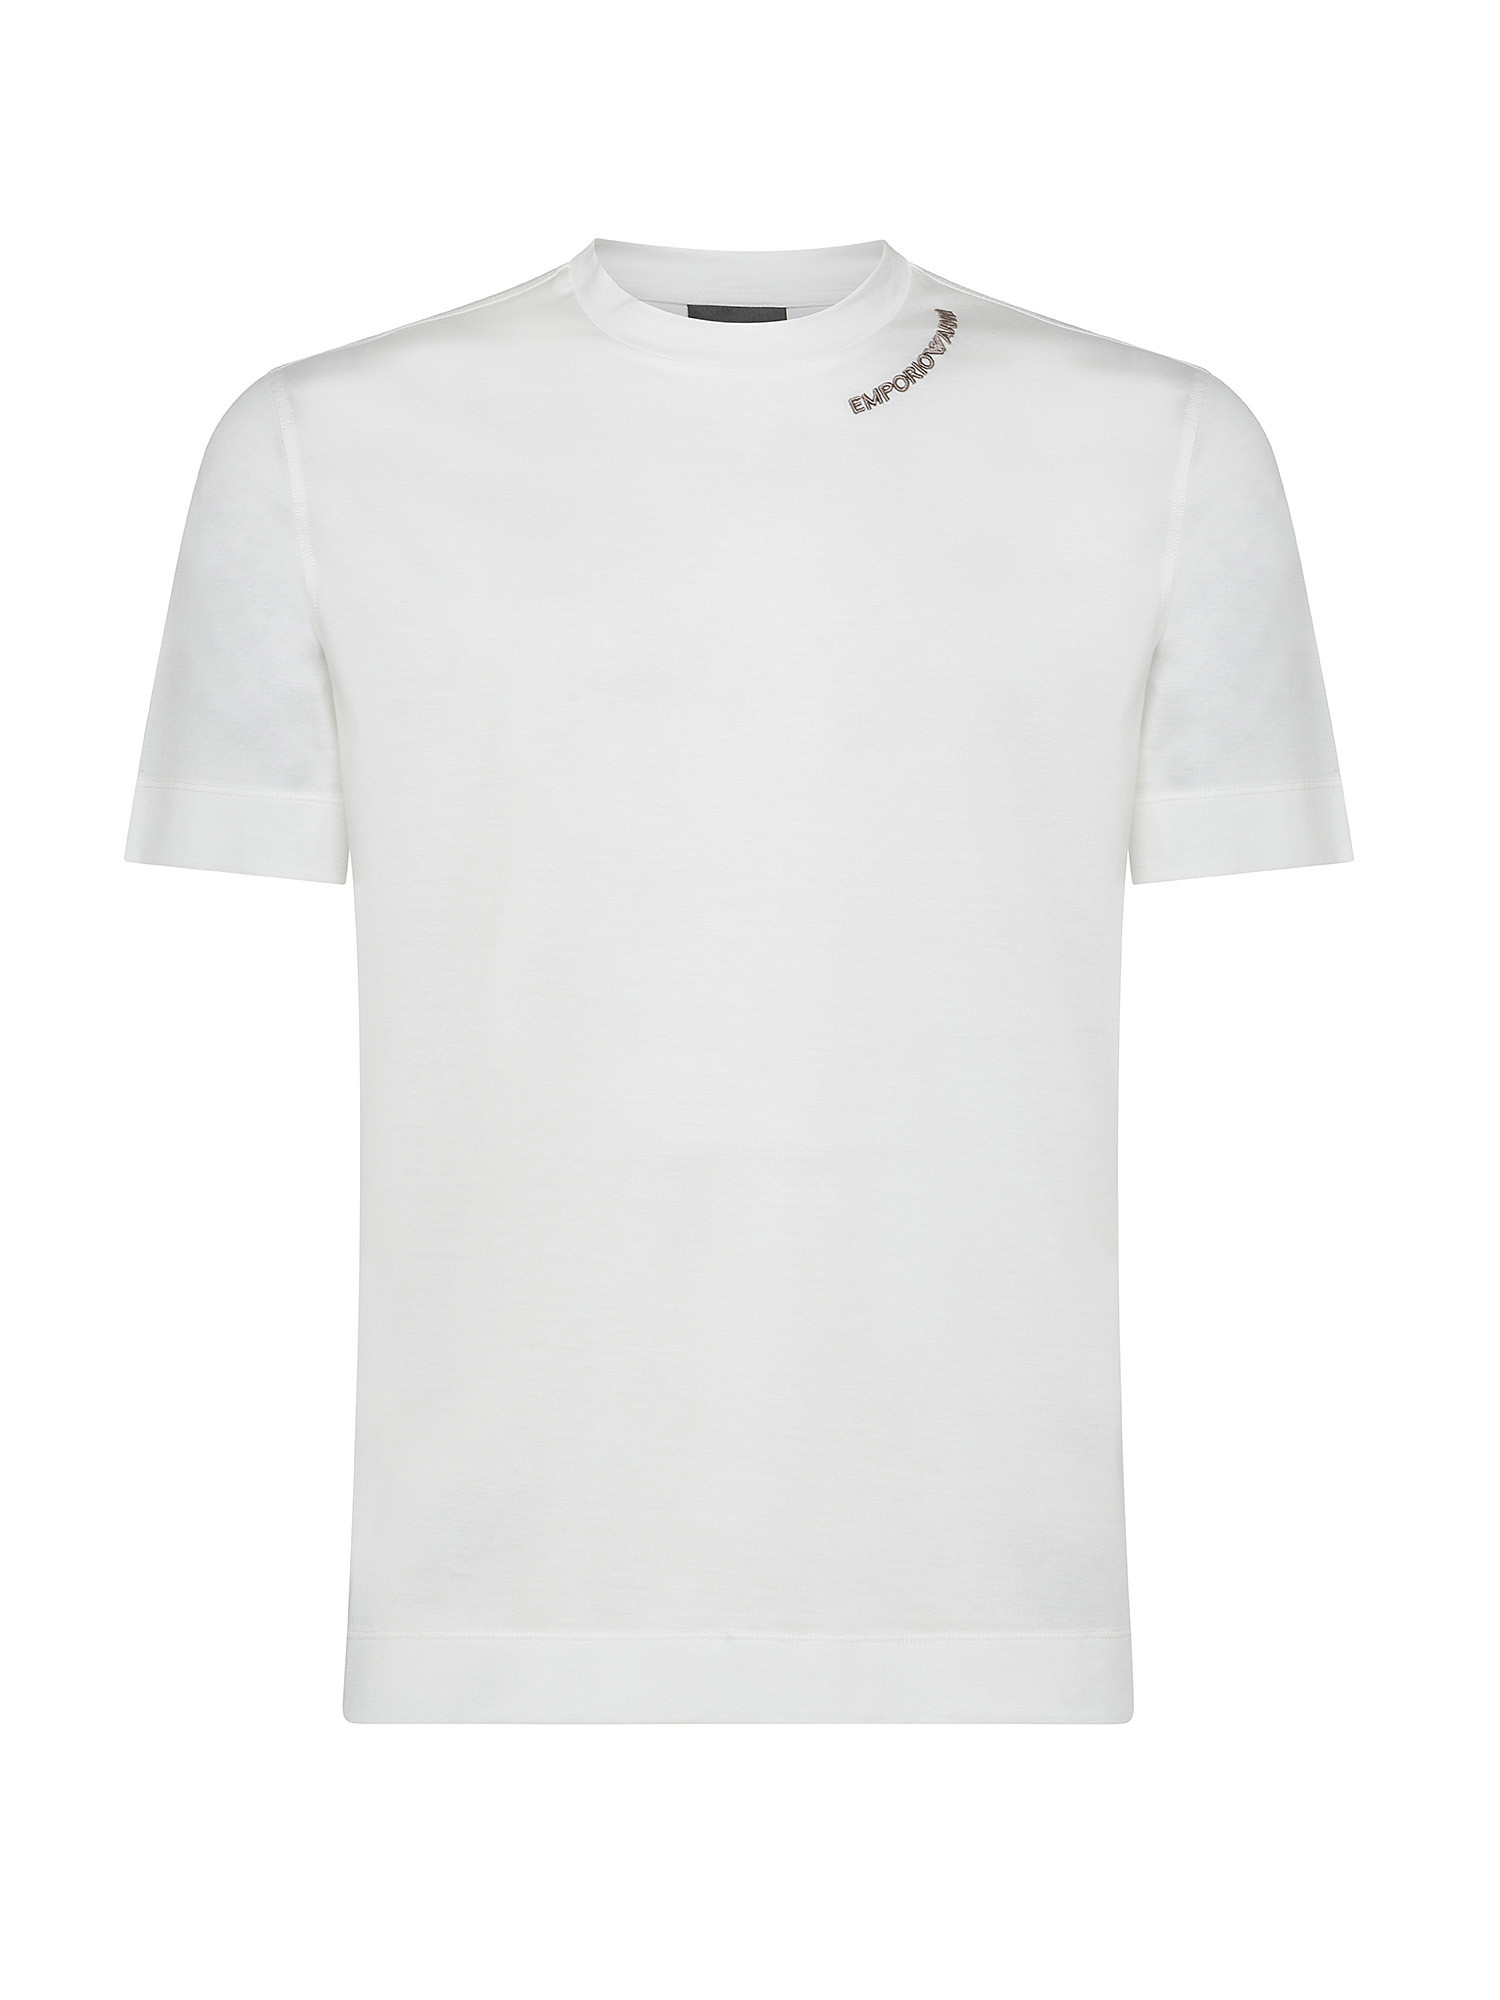 Emporio Armani - T-shirt con logo ricamato, Bianco, large image number 0